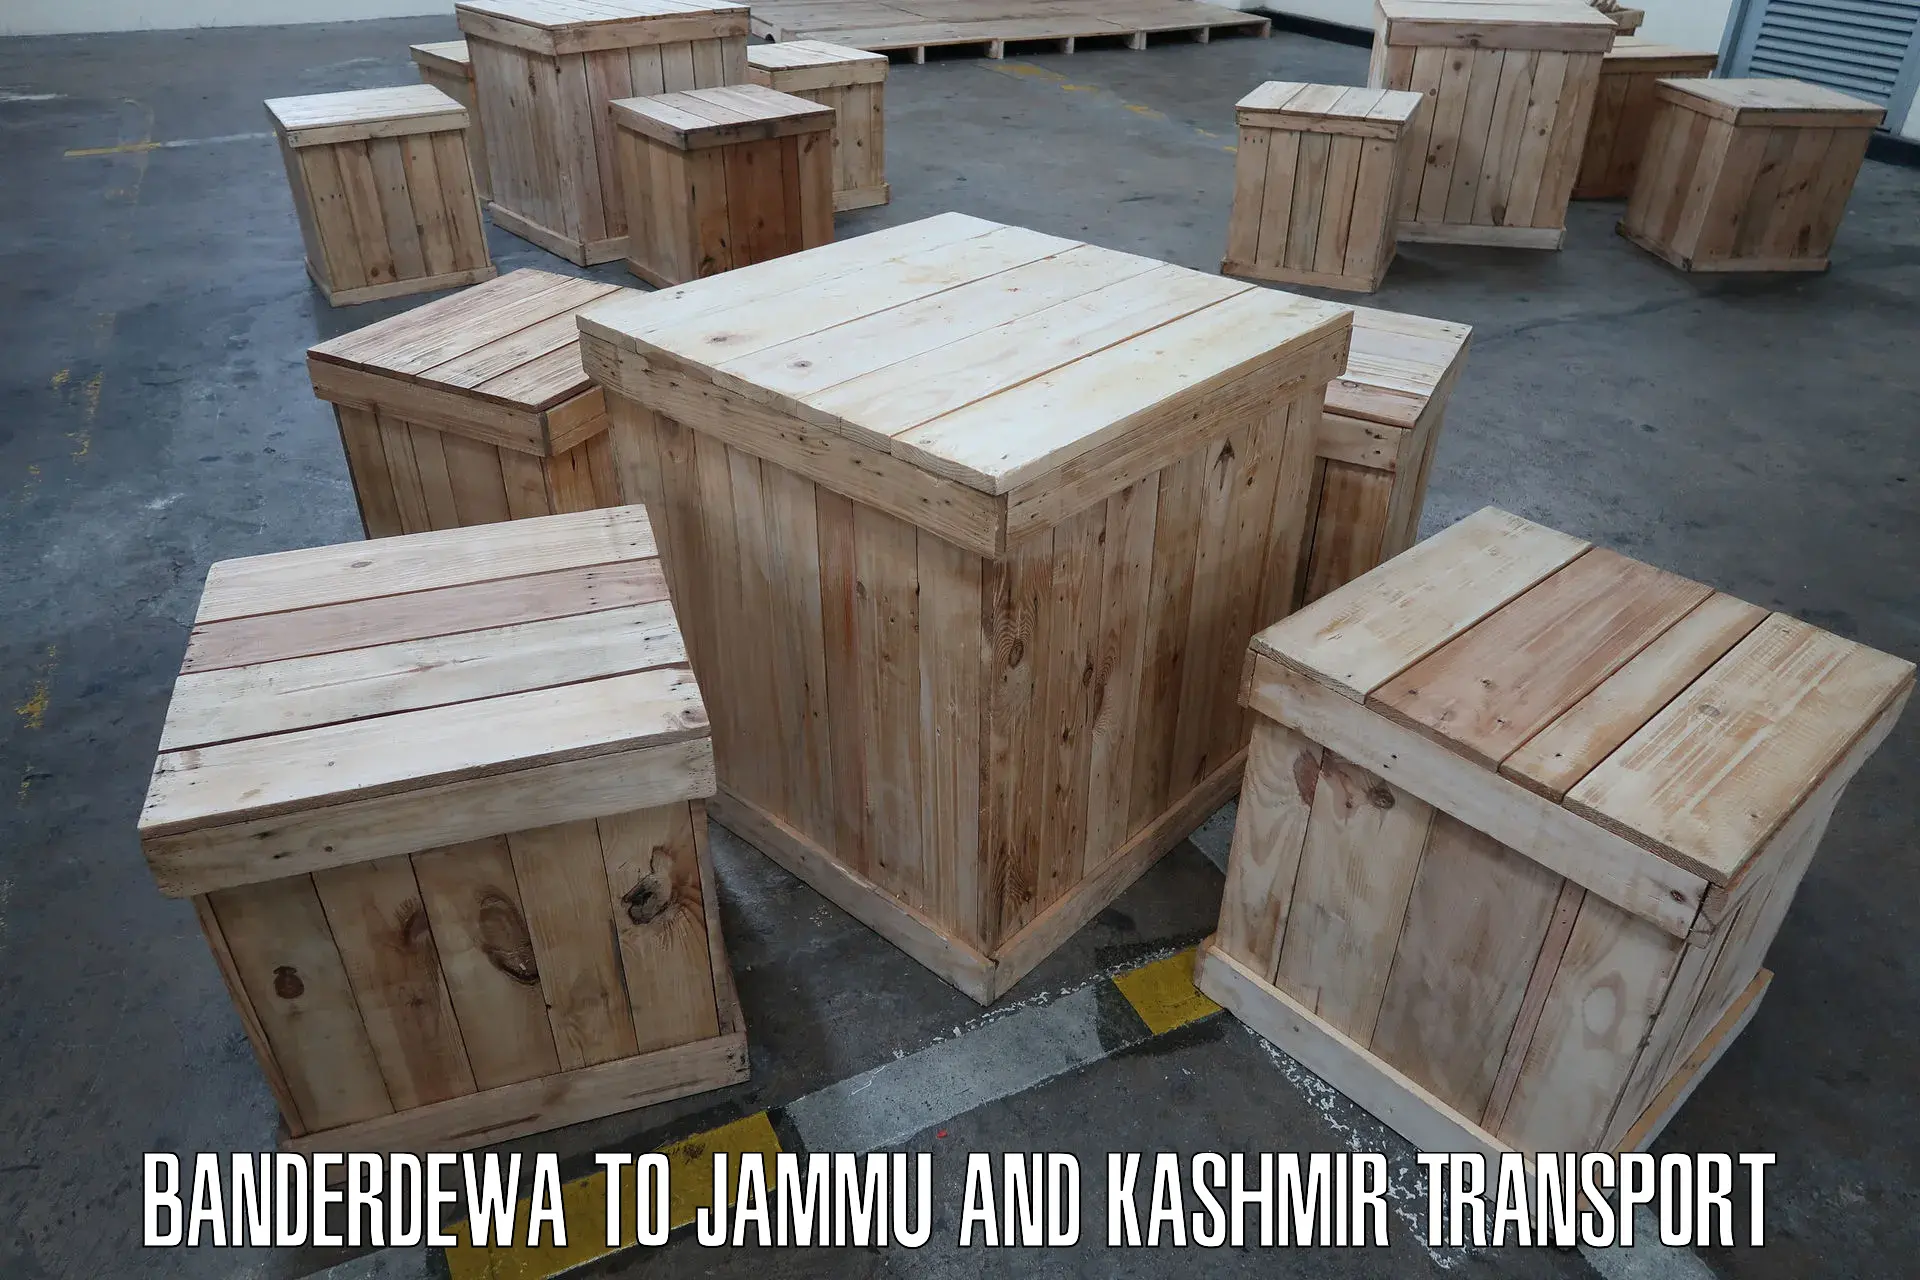 Truck transport companies in India Banderdewa to Srinagar Kashmir